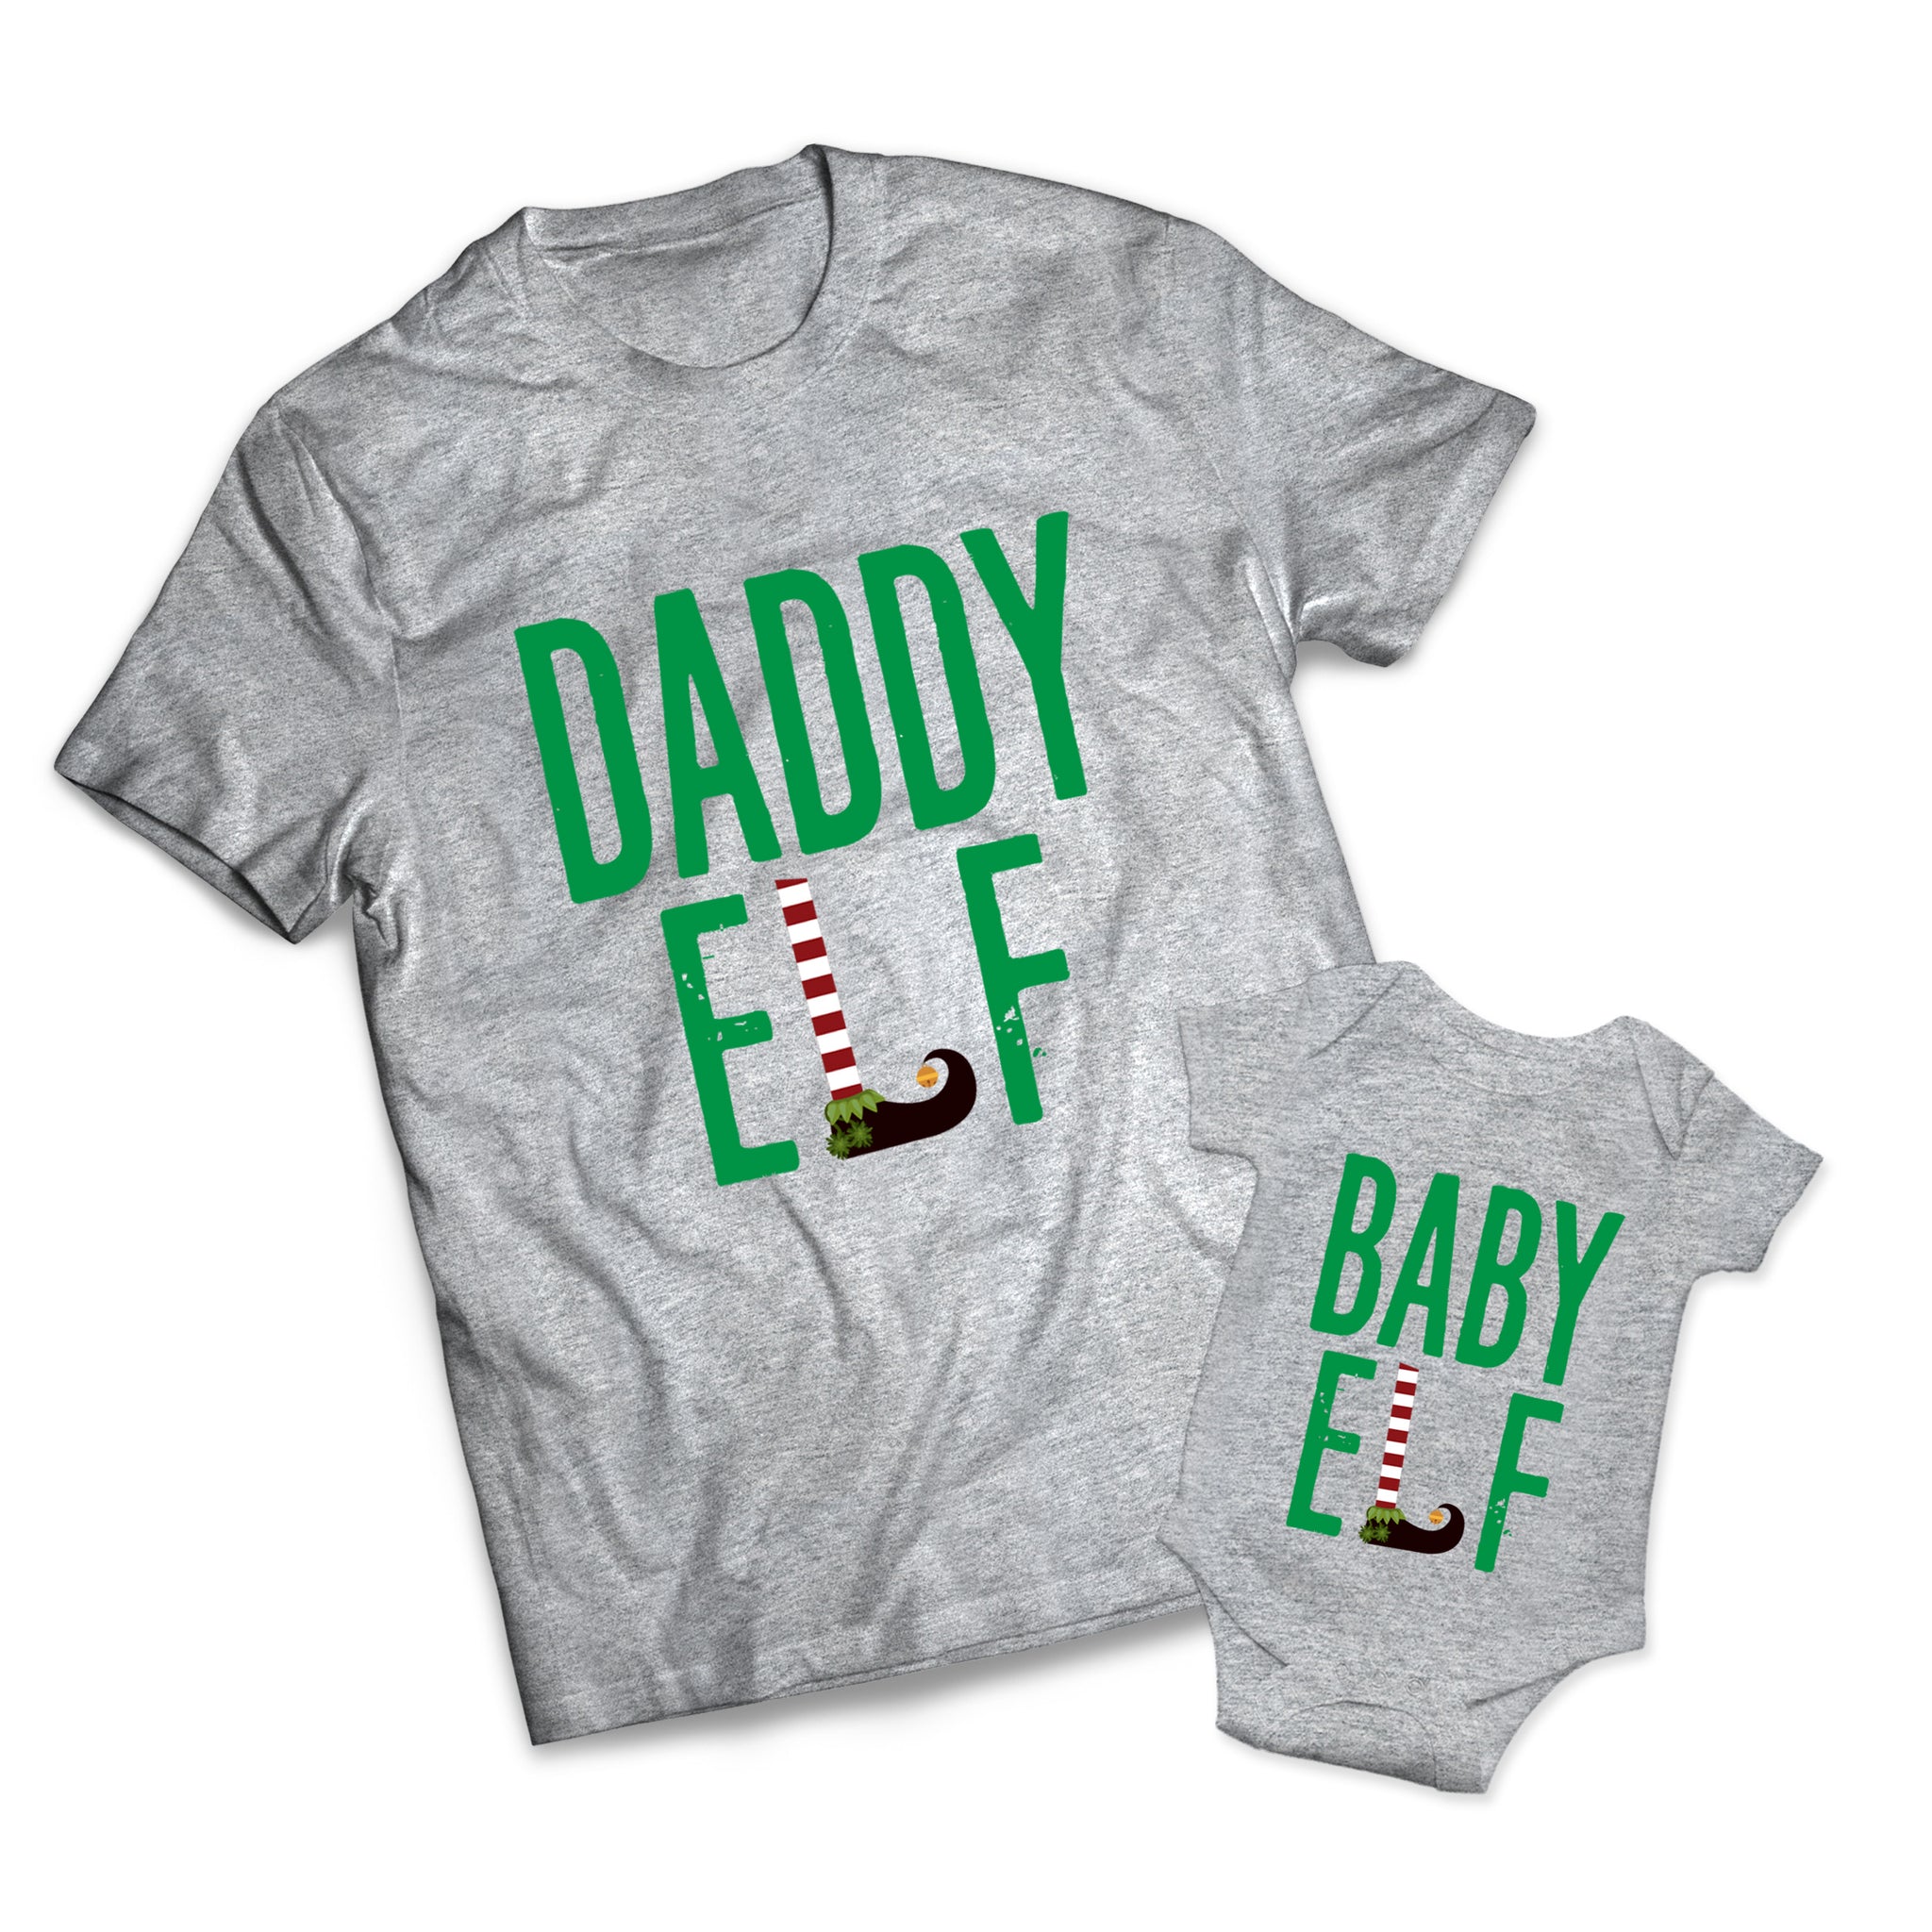 Daddy Elf Baby Elf Set - Christmas -  Matching Shirts